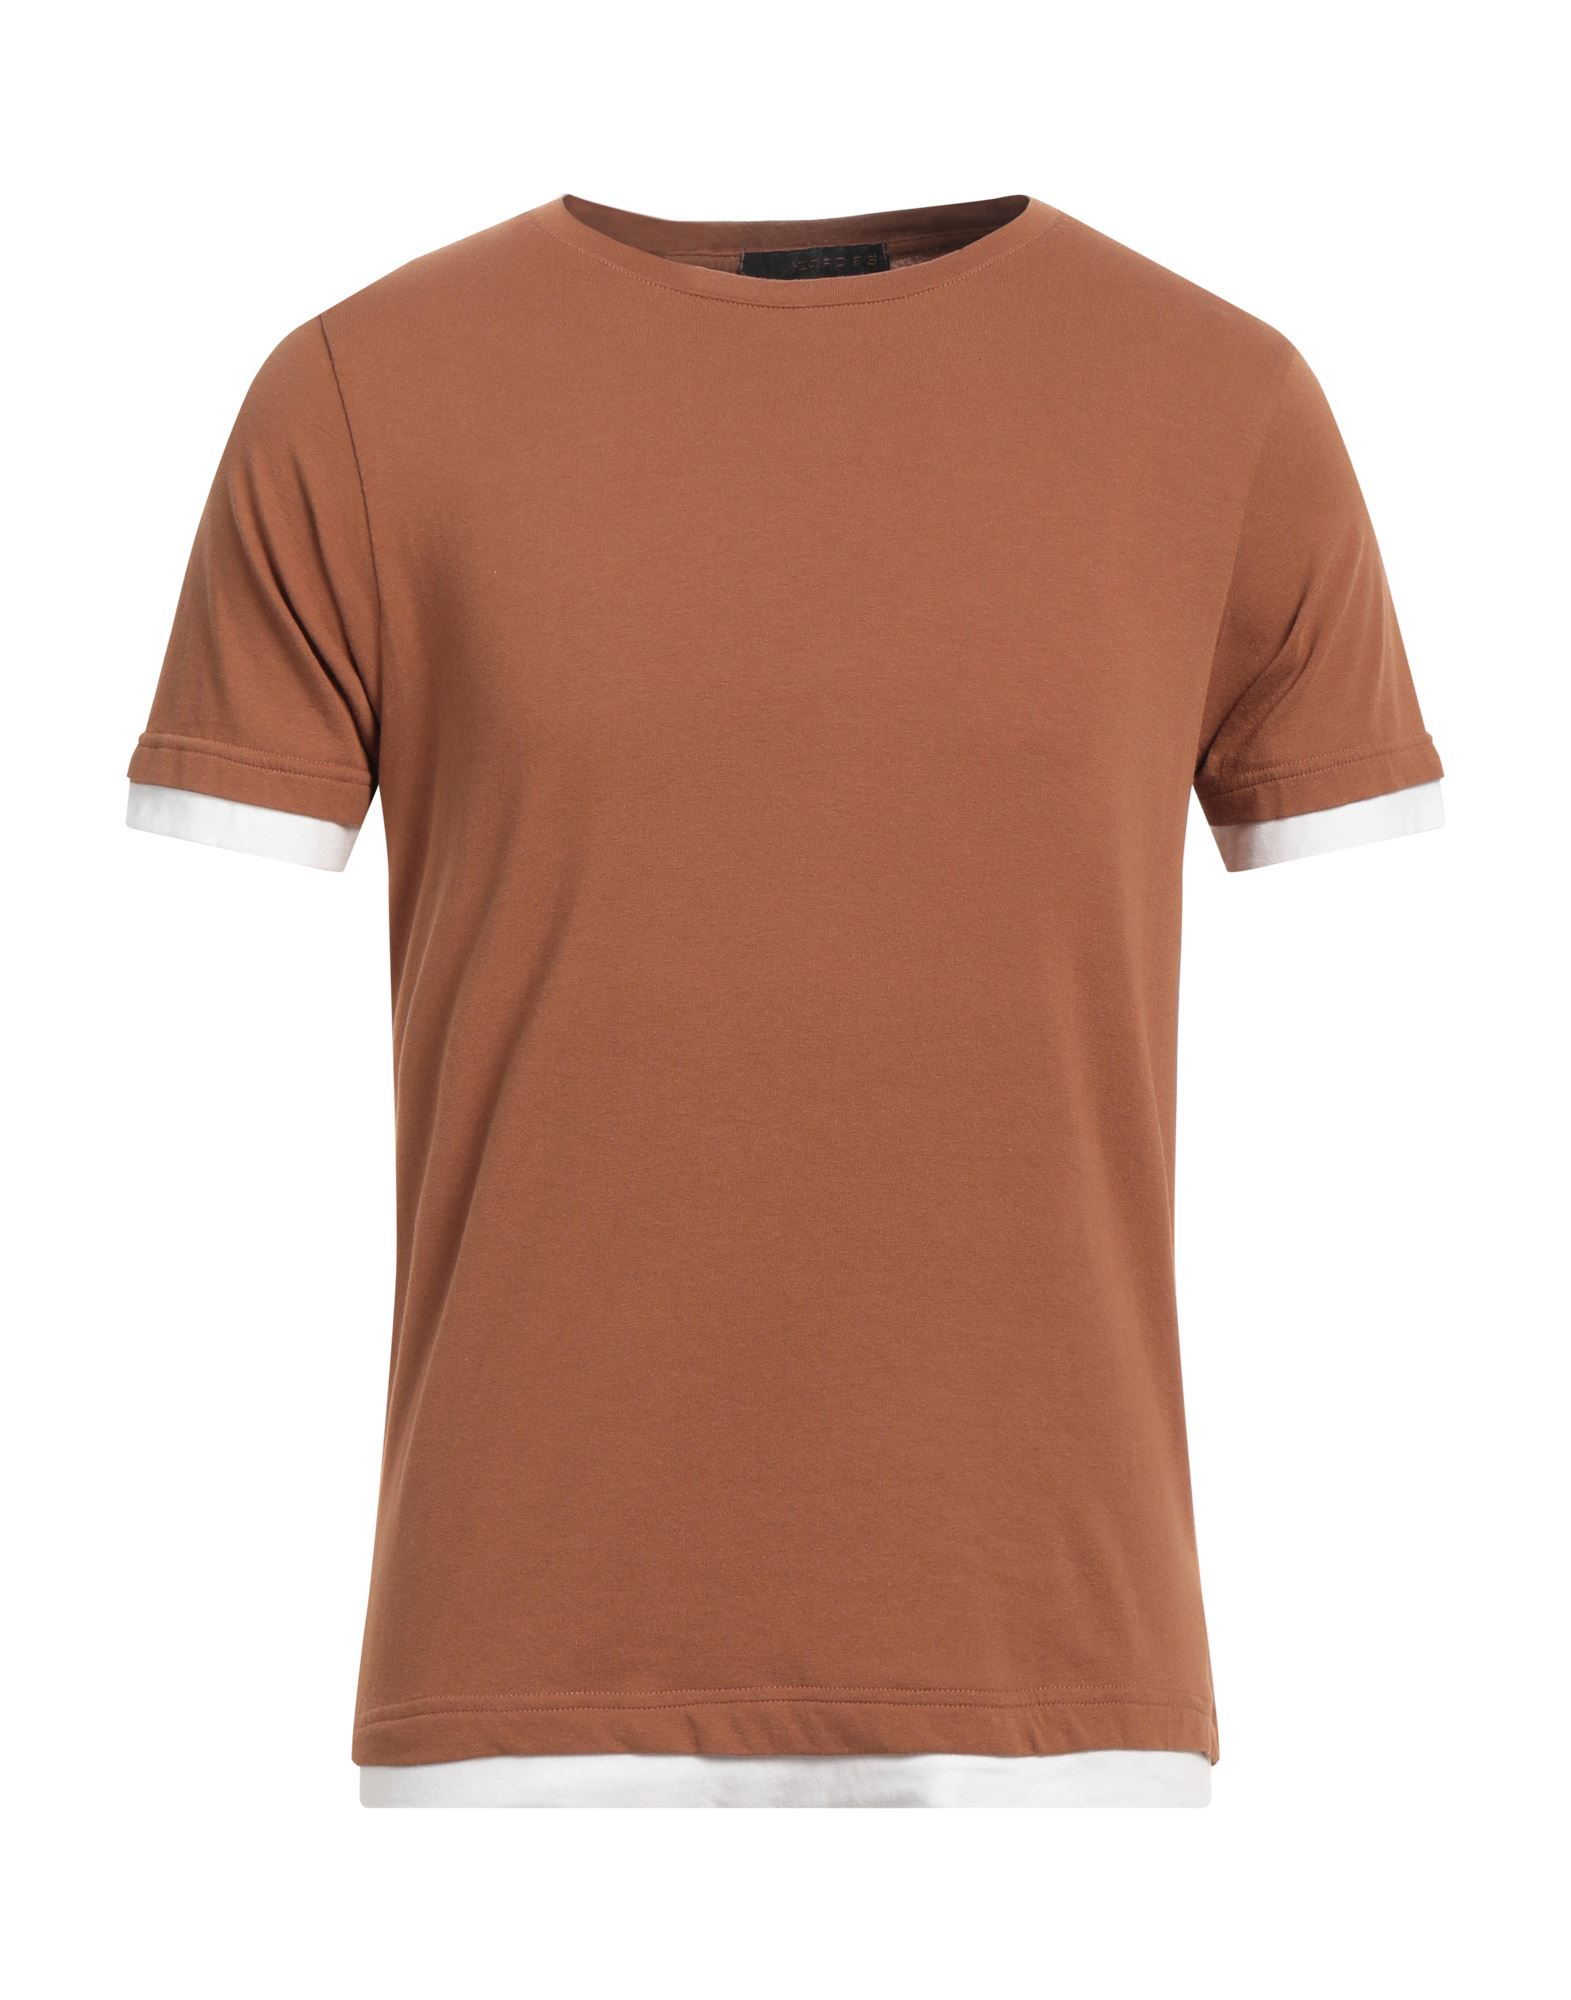 Jeordie's Man T-shirt Brown Size 3xl Cotton, Elastane